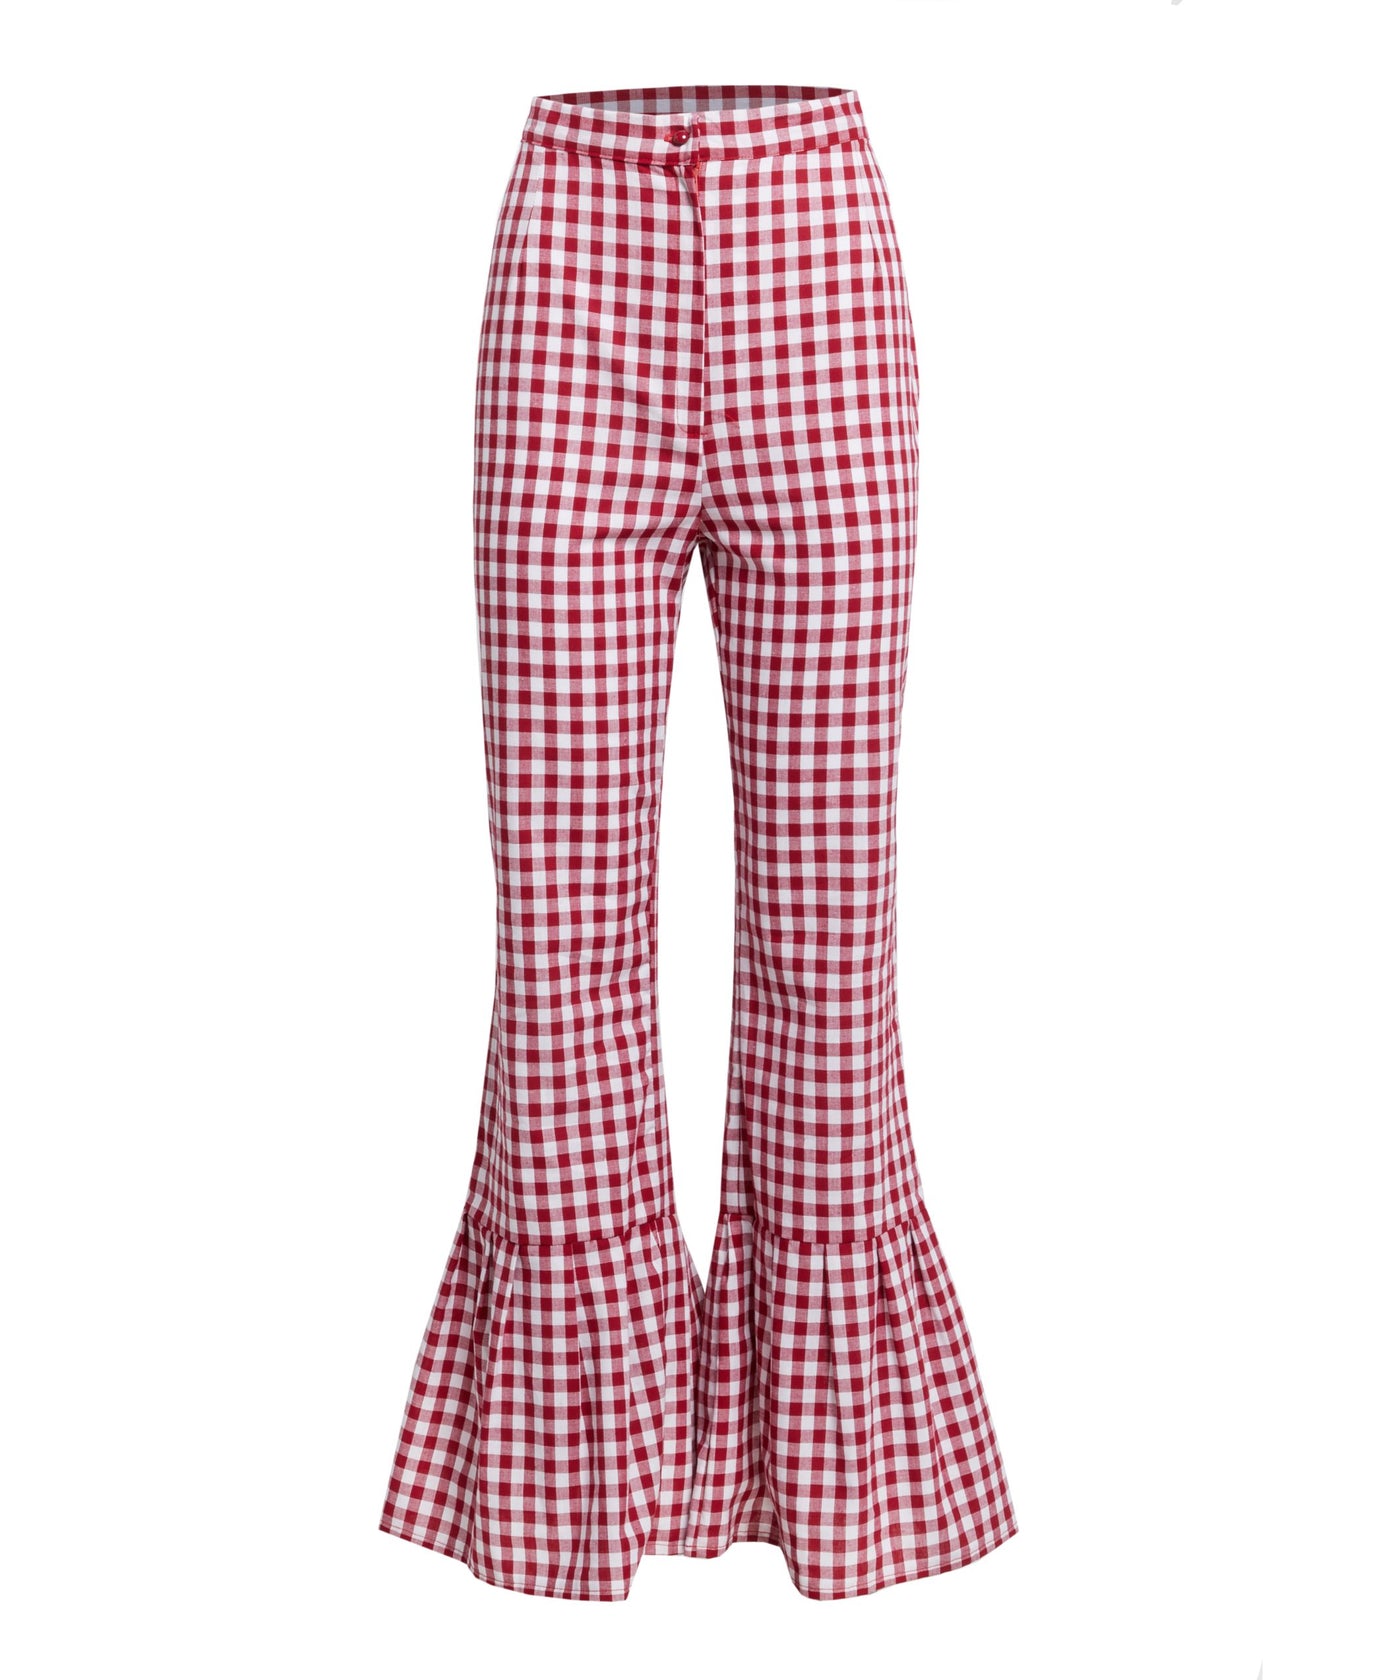 Vichy/Red Pants